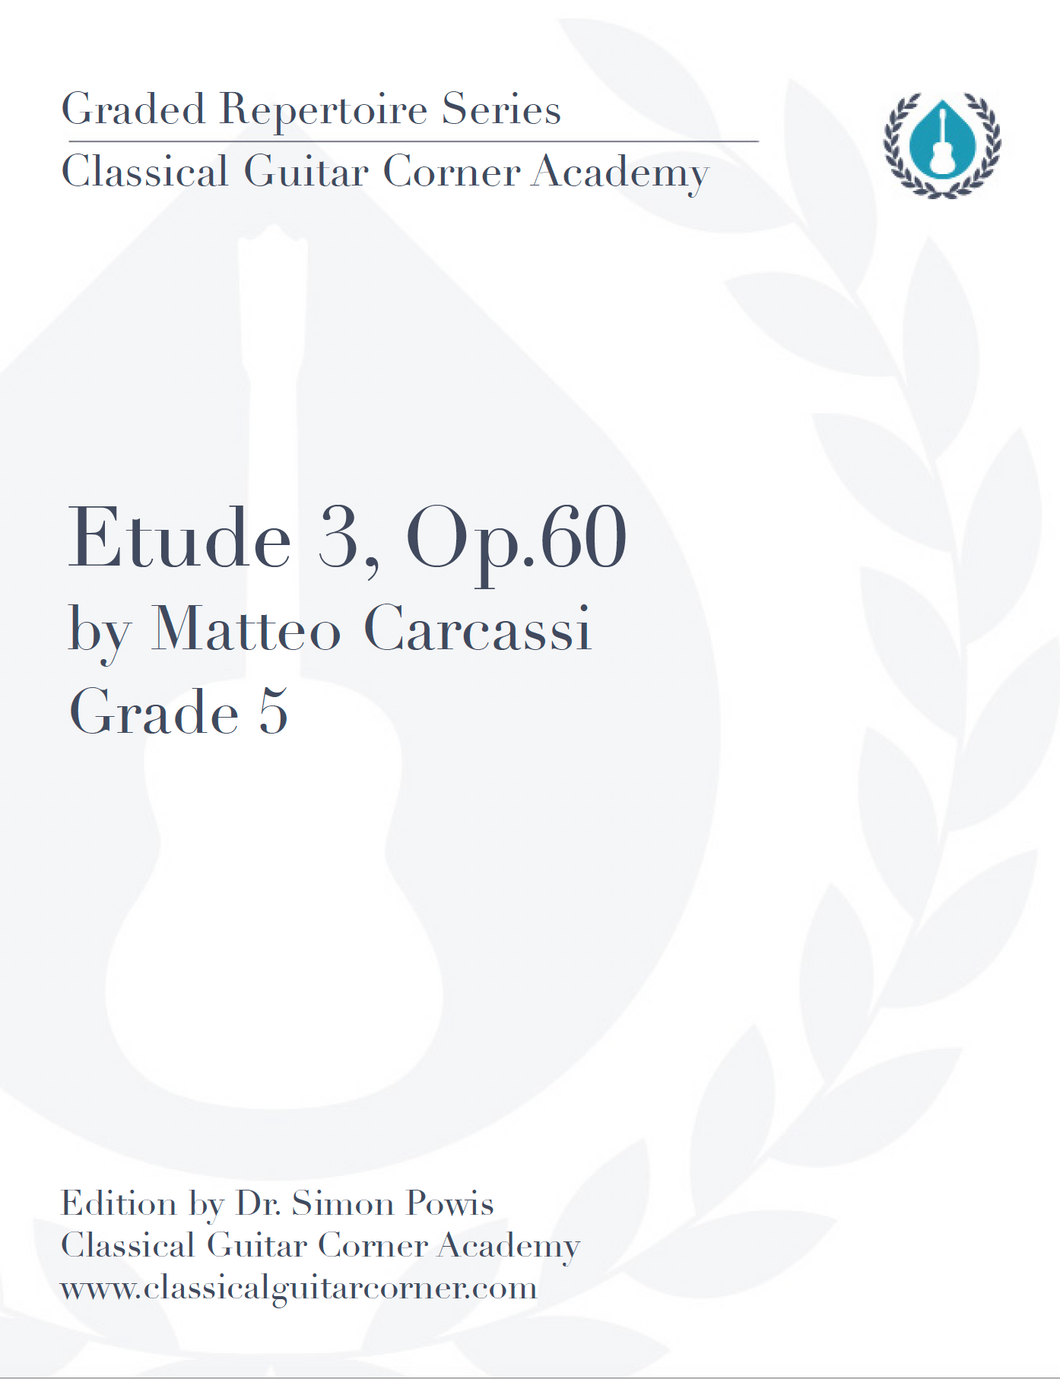 Etude 3, Op.60 by Matteo Carcassi